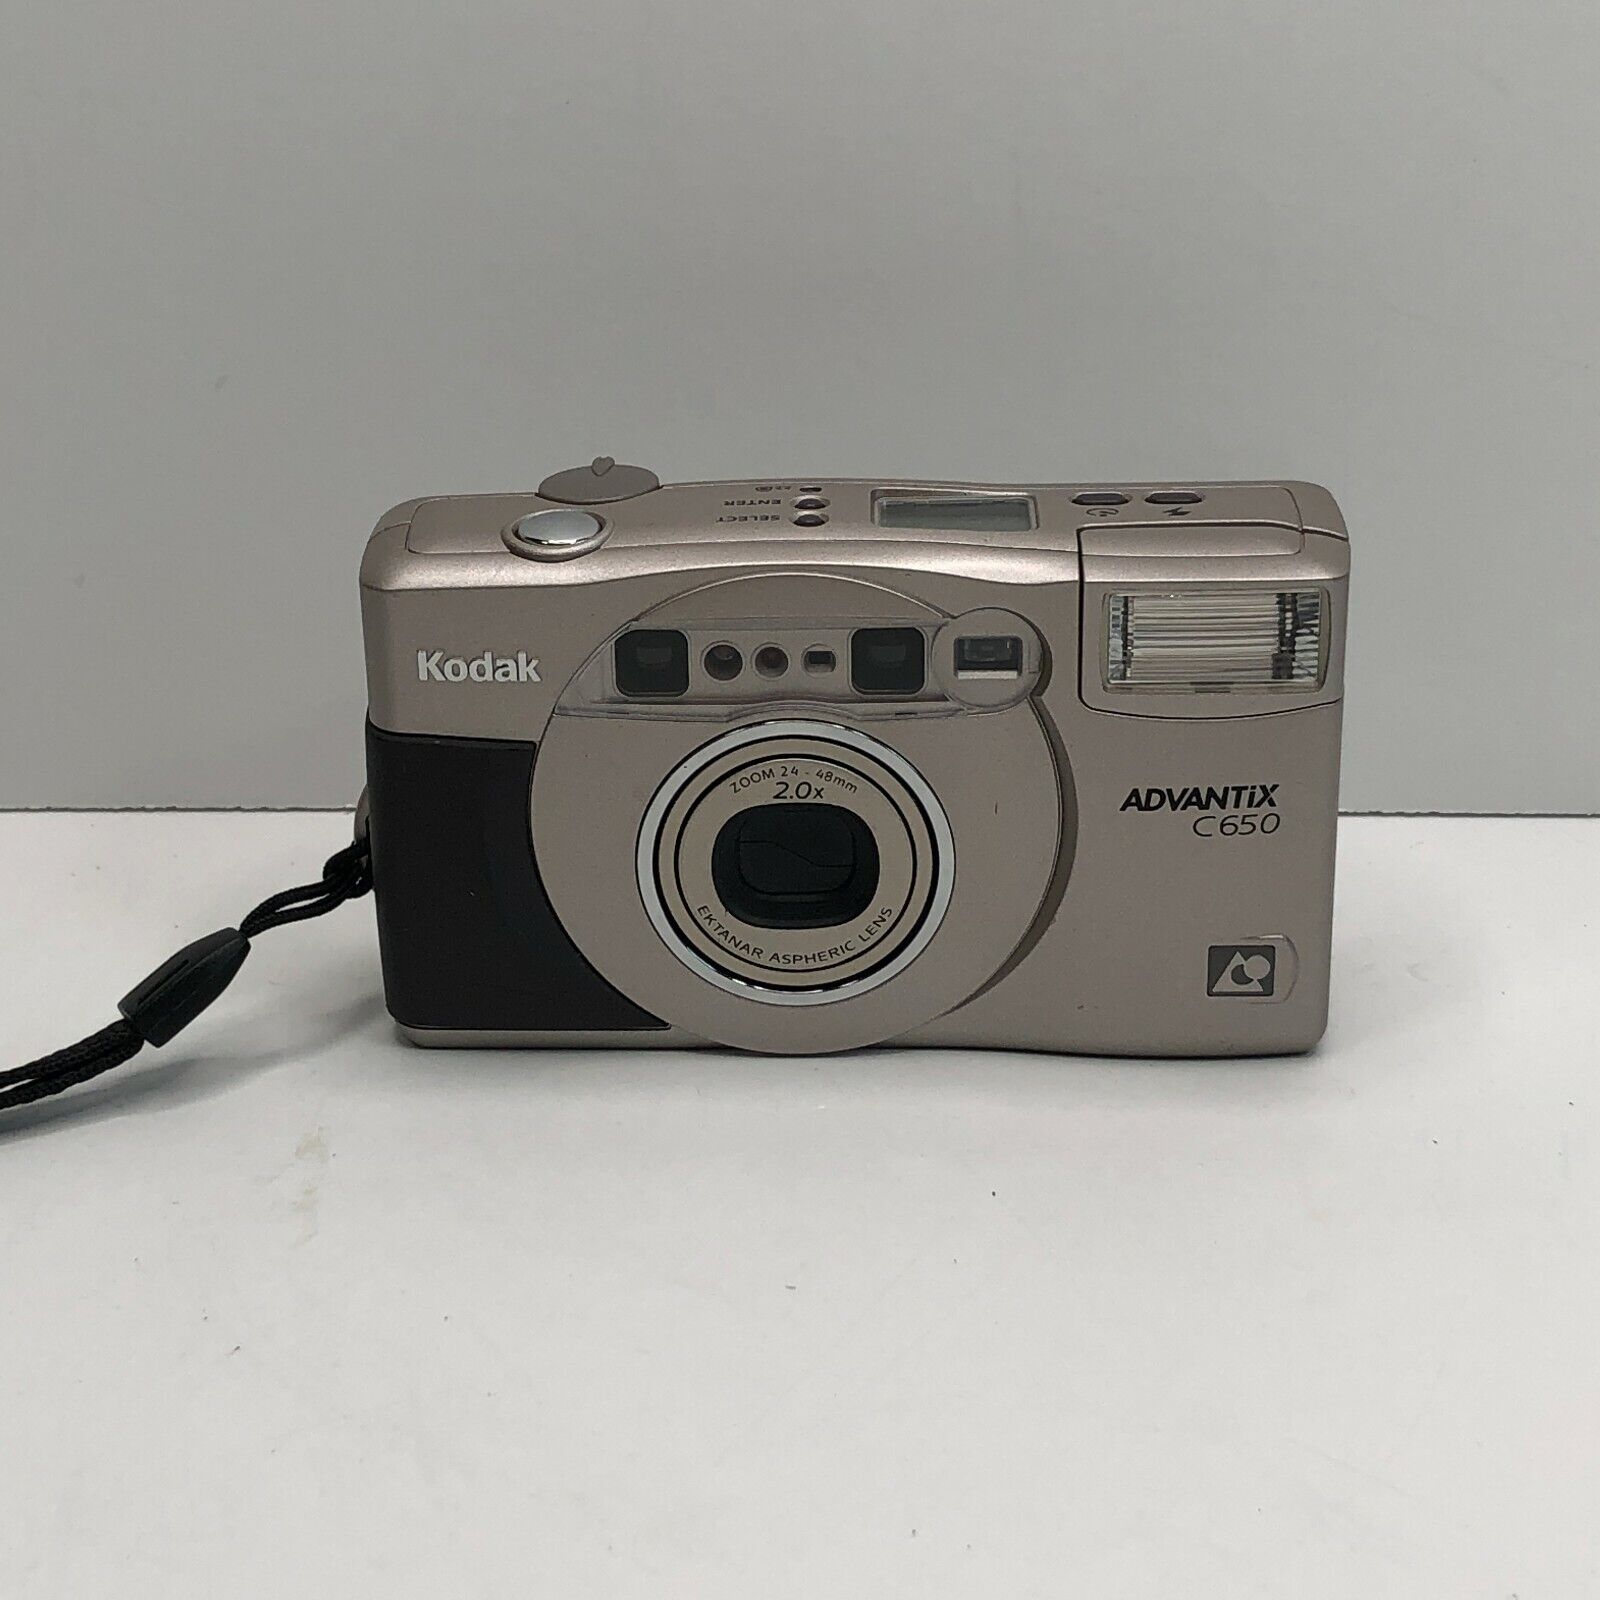 Kodak Advantix C650 Zoom APS Point & Shoot Film Camera Tested 